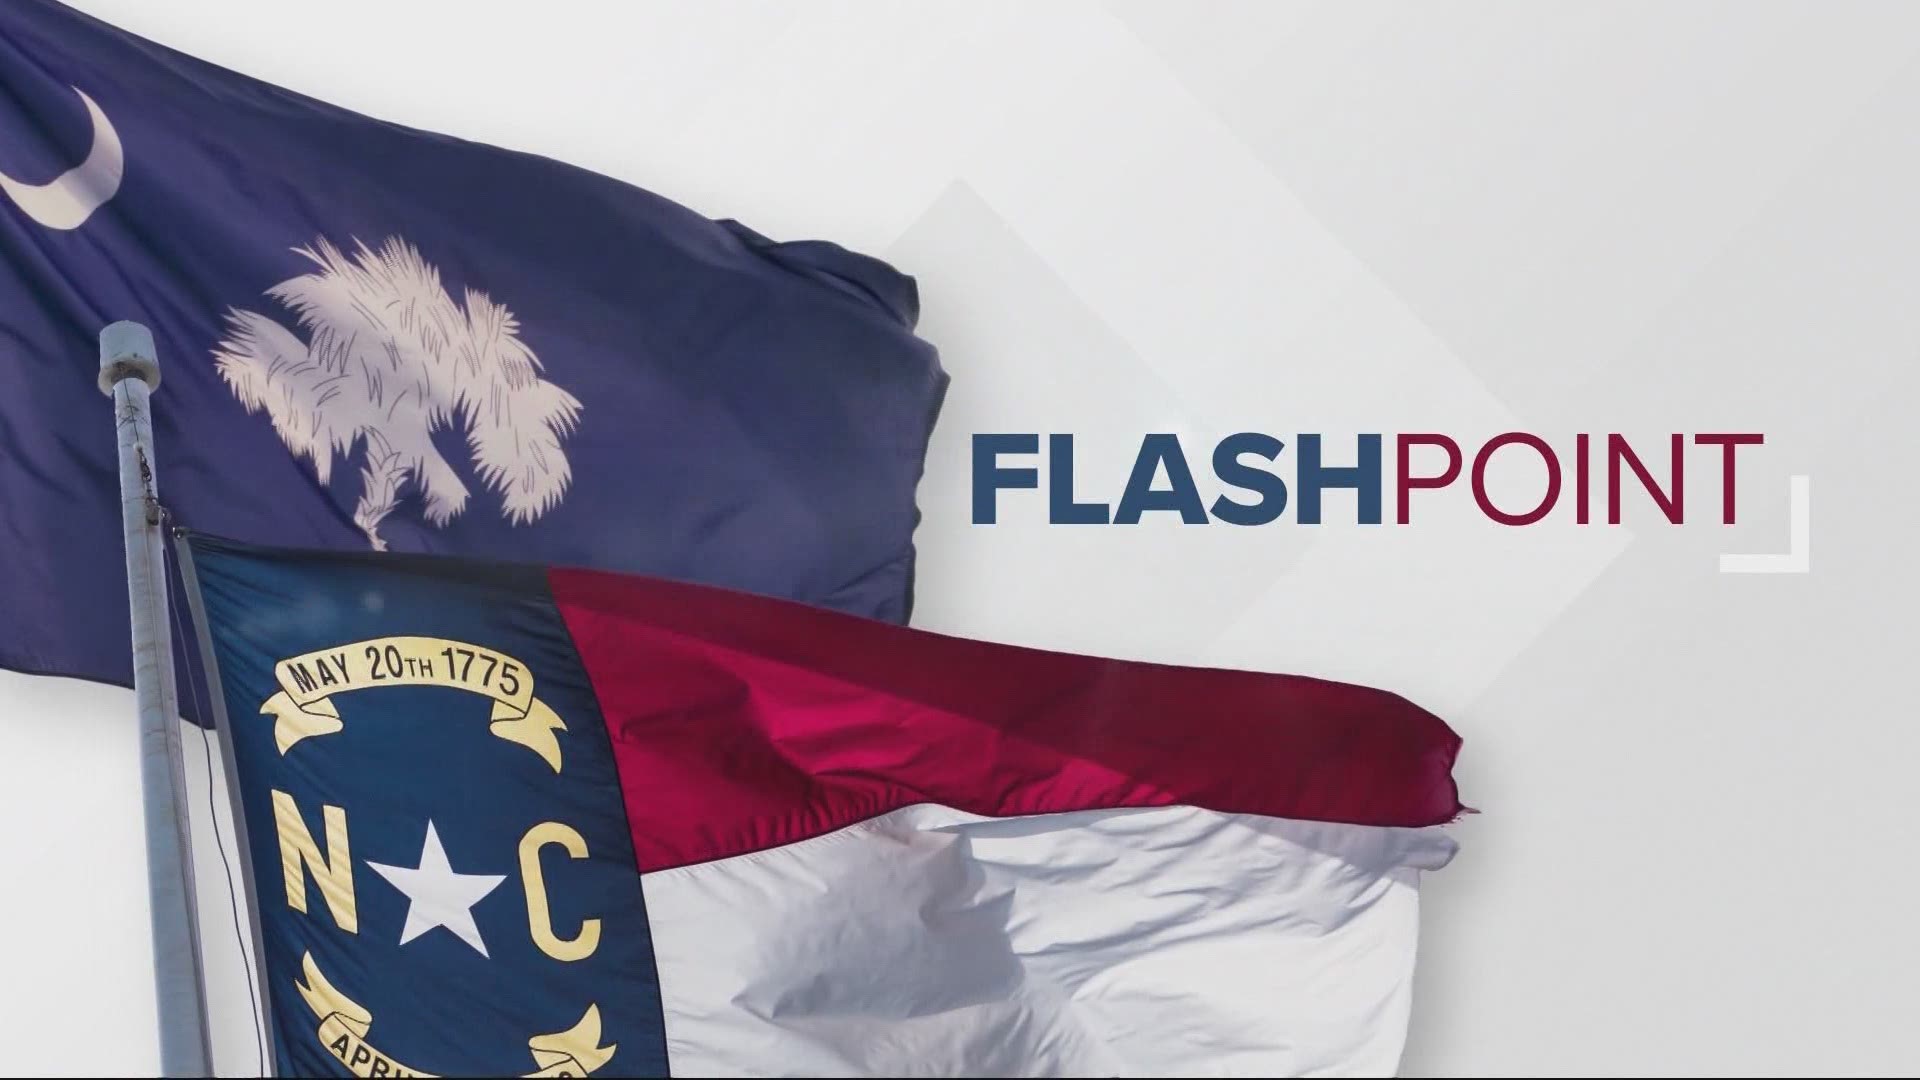 Flashpoint 7/5: Charlotte Cityh Councilmen, Republican Tariq Bokhari and Democrat Larken Egleston